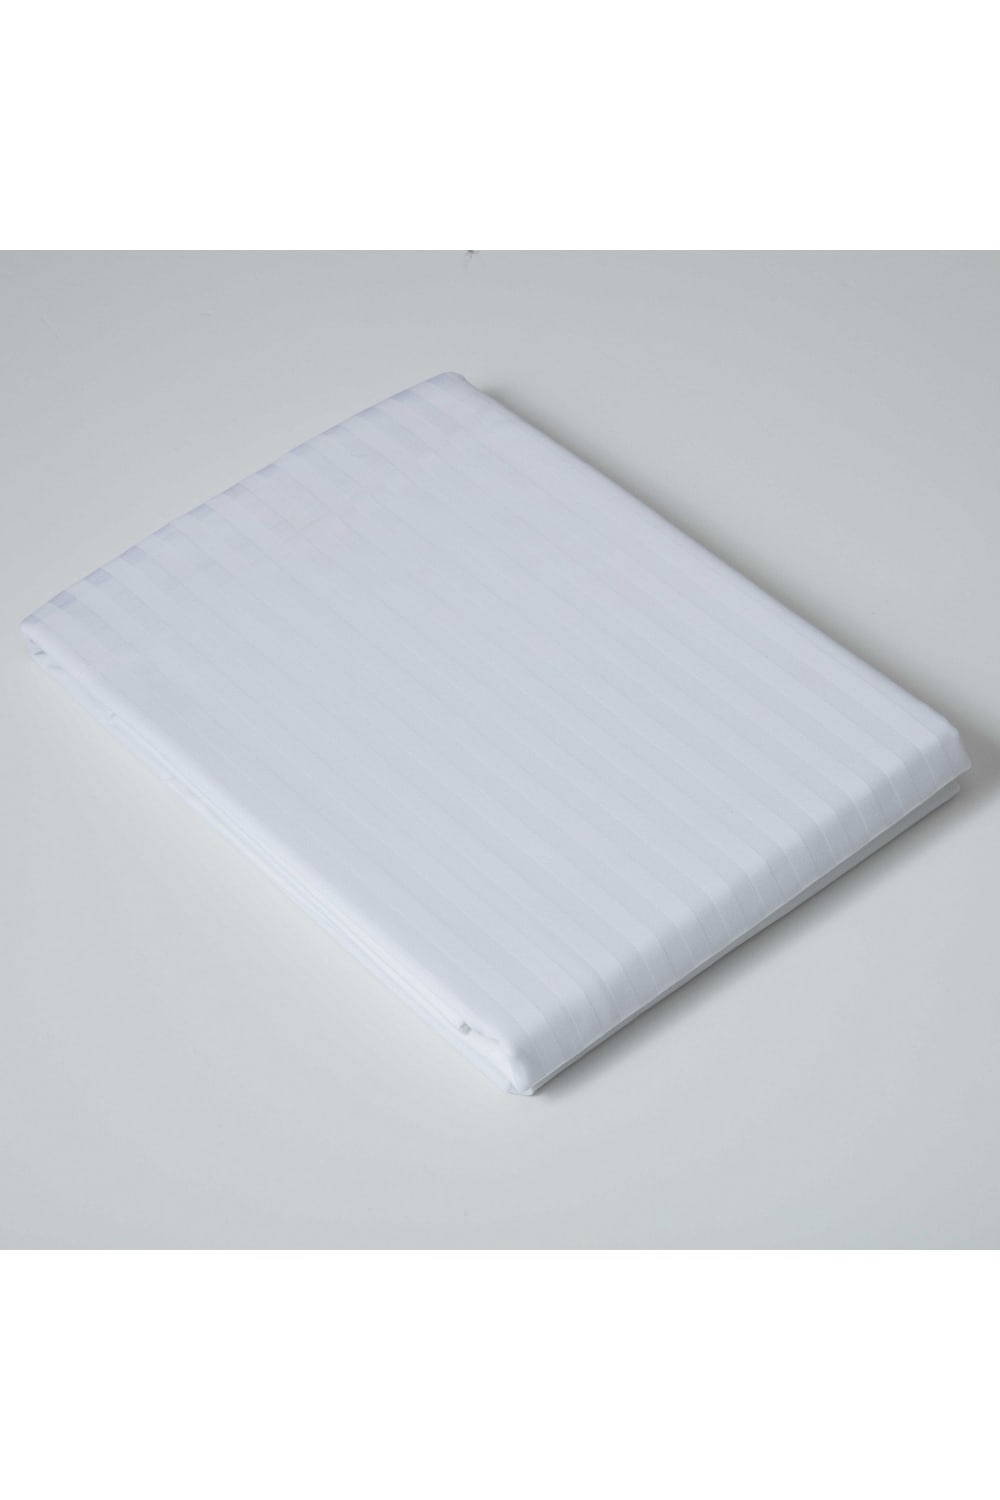 Belledorm 540 Thread Count Satin Stripe Flat Sheet (White) (Twin) (UK - Single)